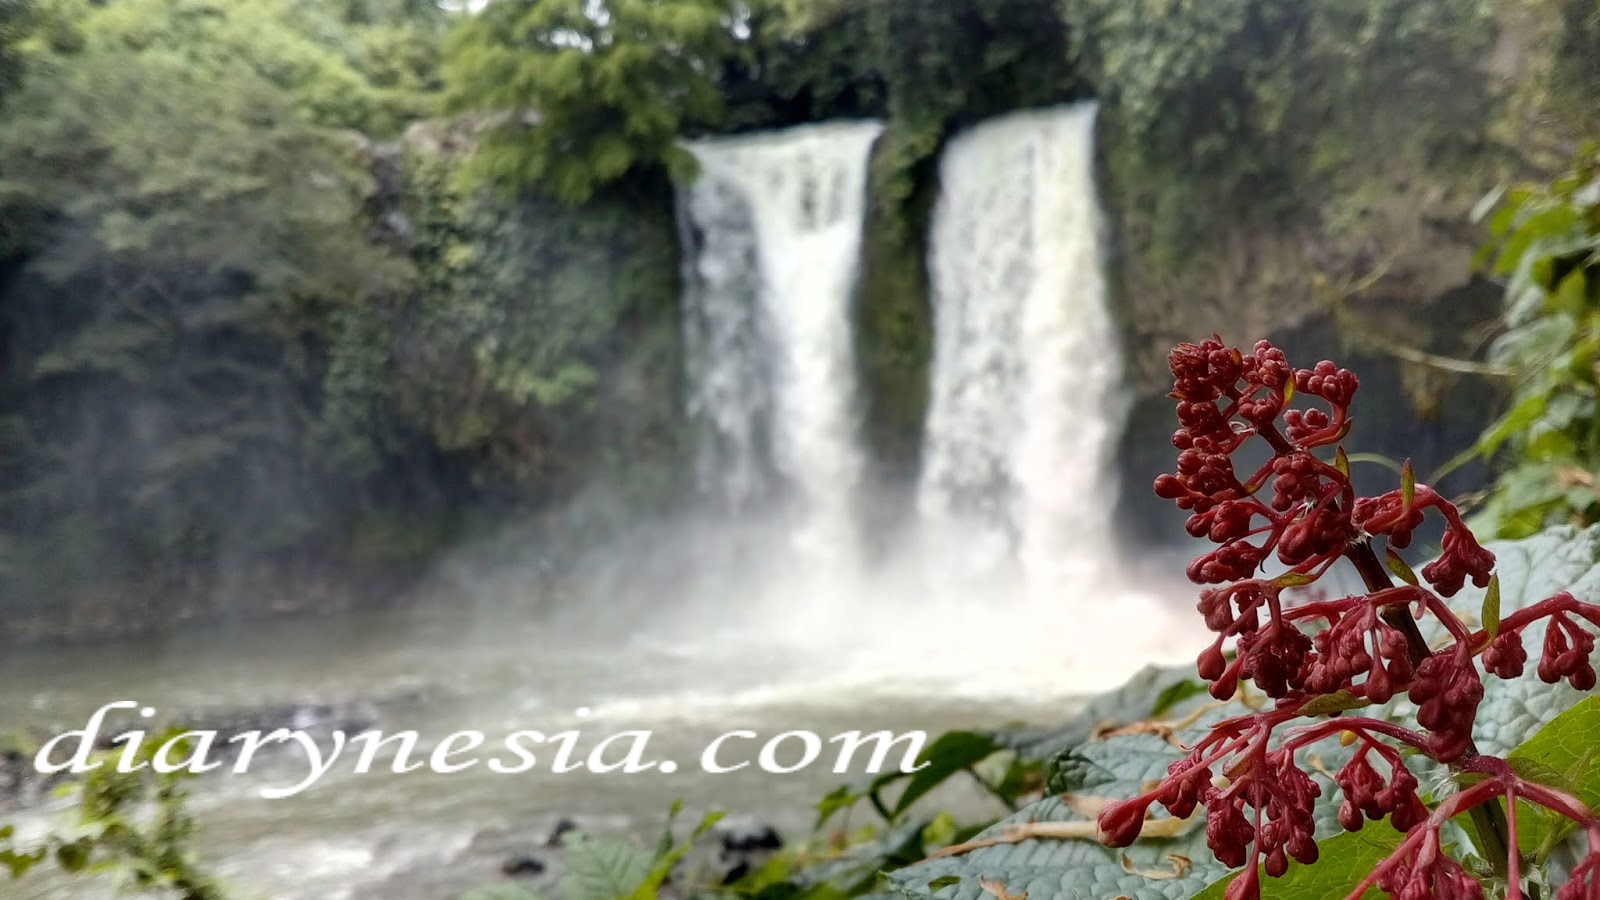 Pemalang tourism, Central Java, Pemalang tourist attraction, diarynesia